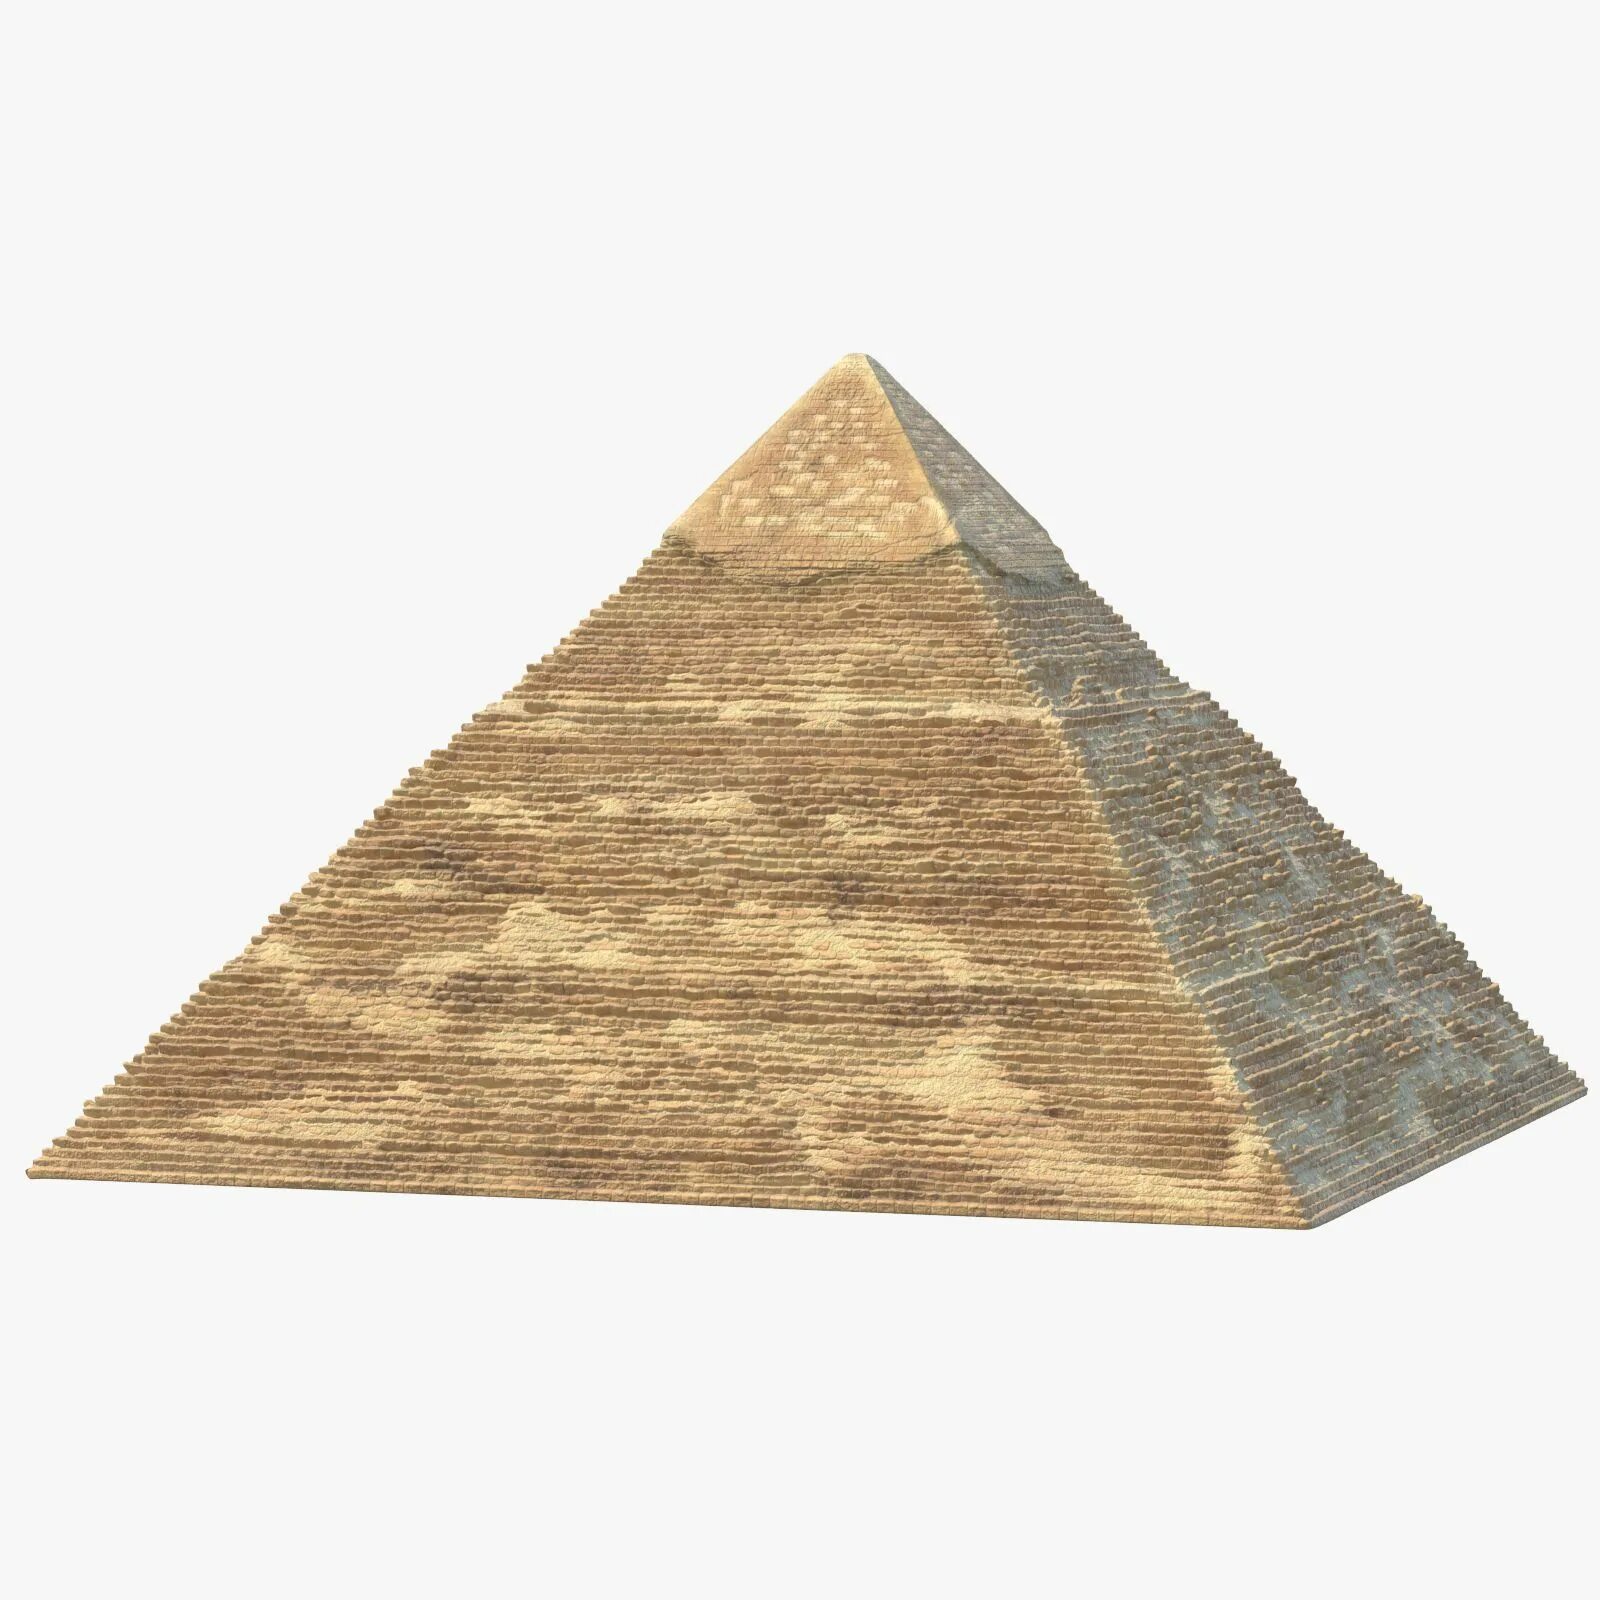 Пирамида 1 16. Пирамида Хеопса 3д. 3д модель пирамиды Хеопса. Пирамида Хеопса 3d модель. Египетская пирамида 3д модель.